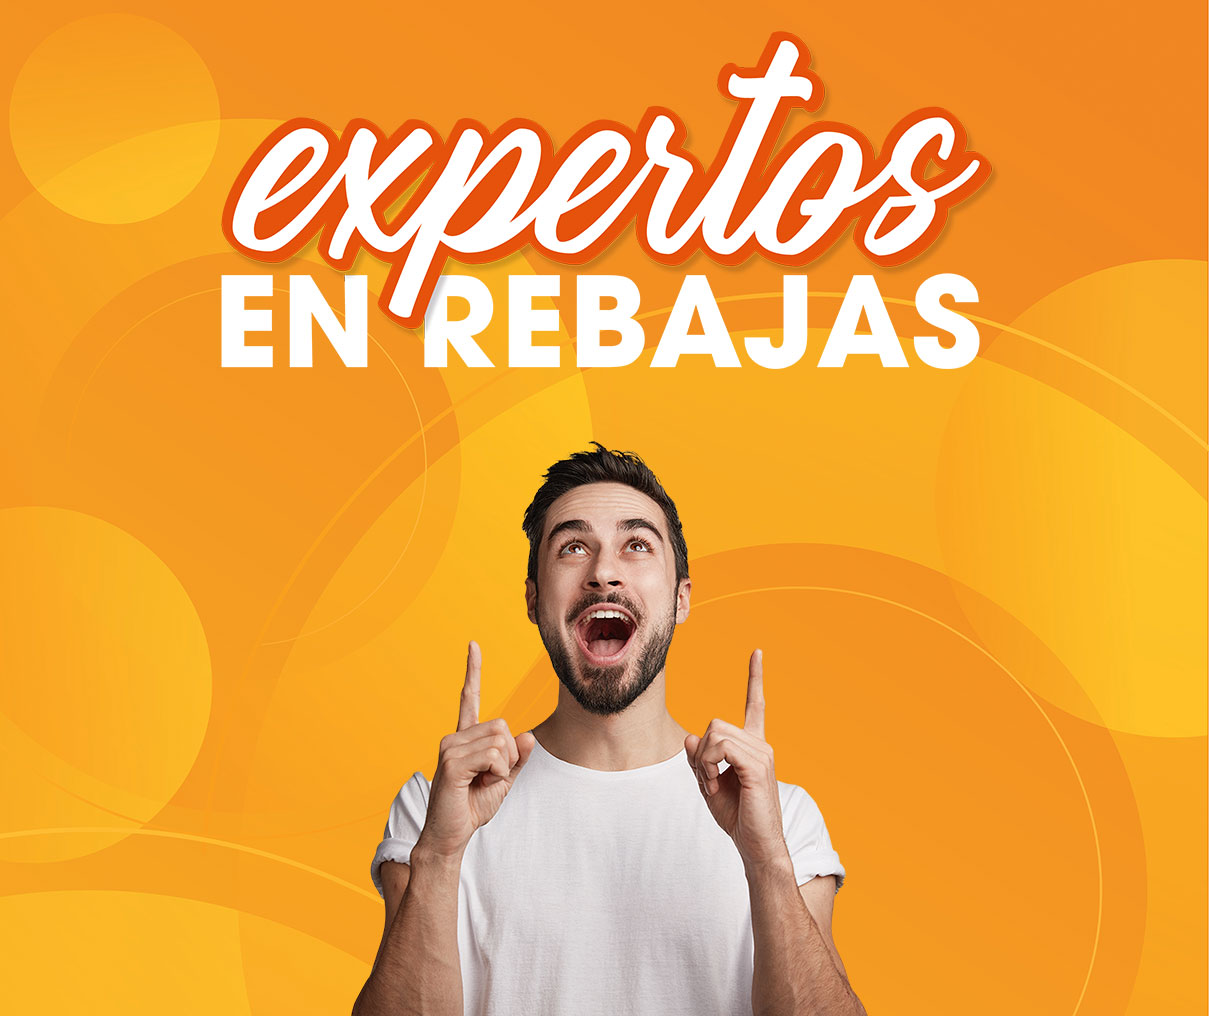 EXPERTOS EN REBAJAS !!! }}